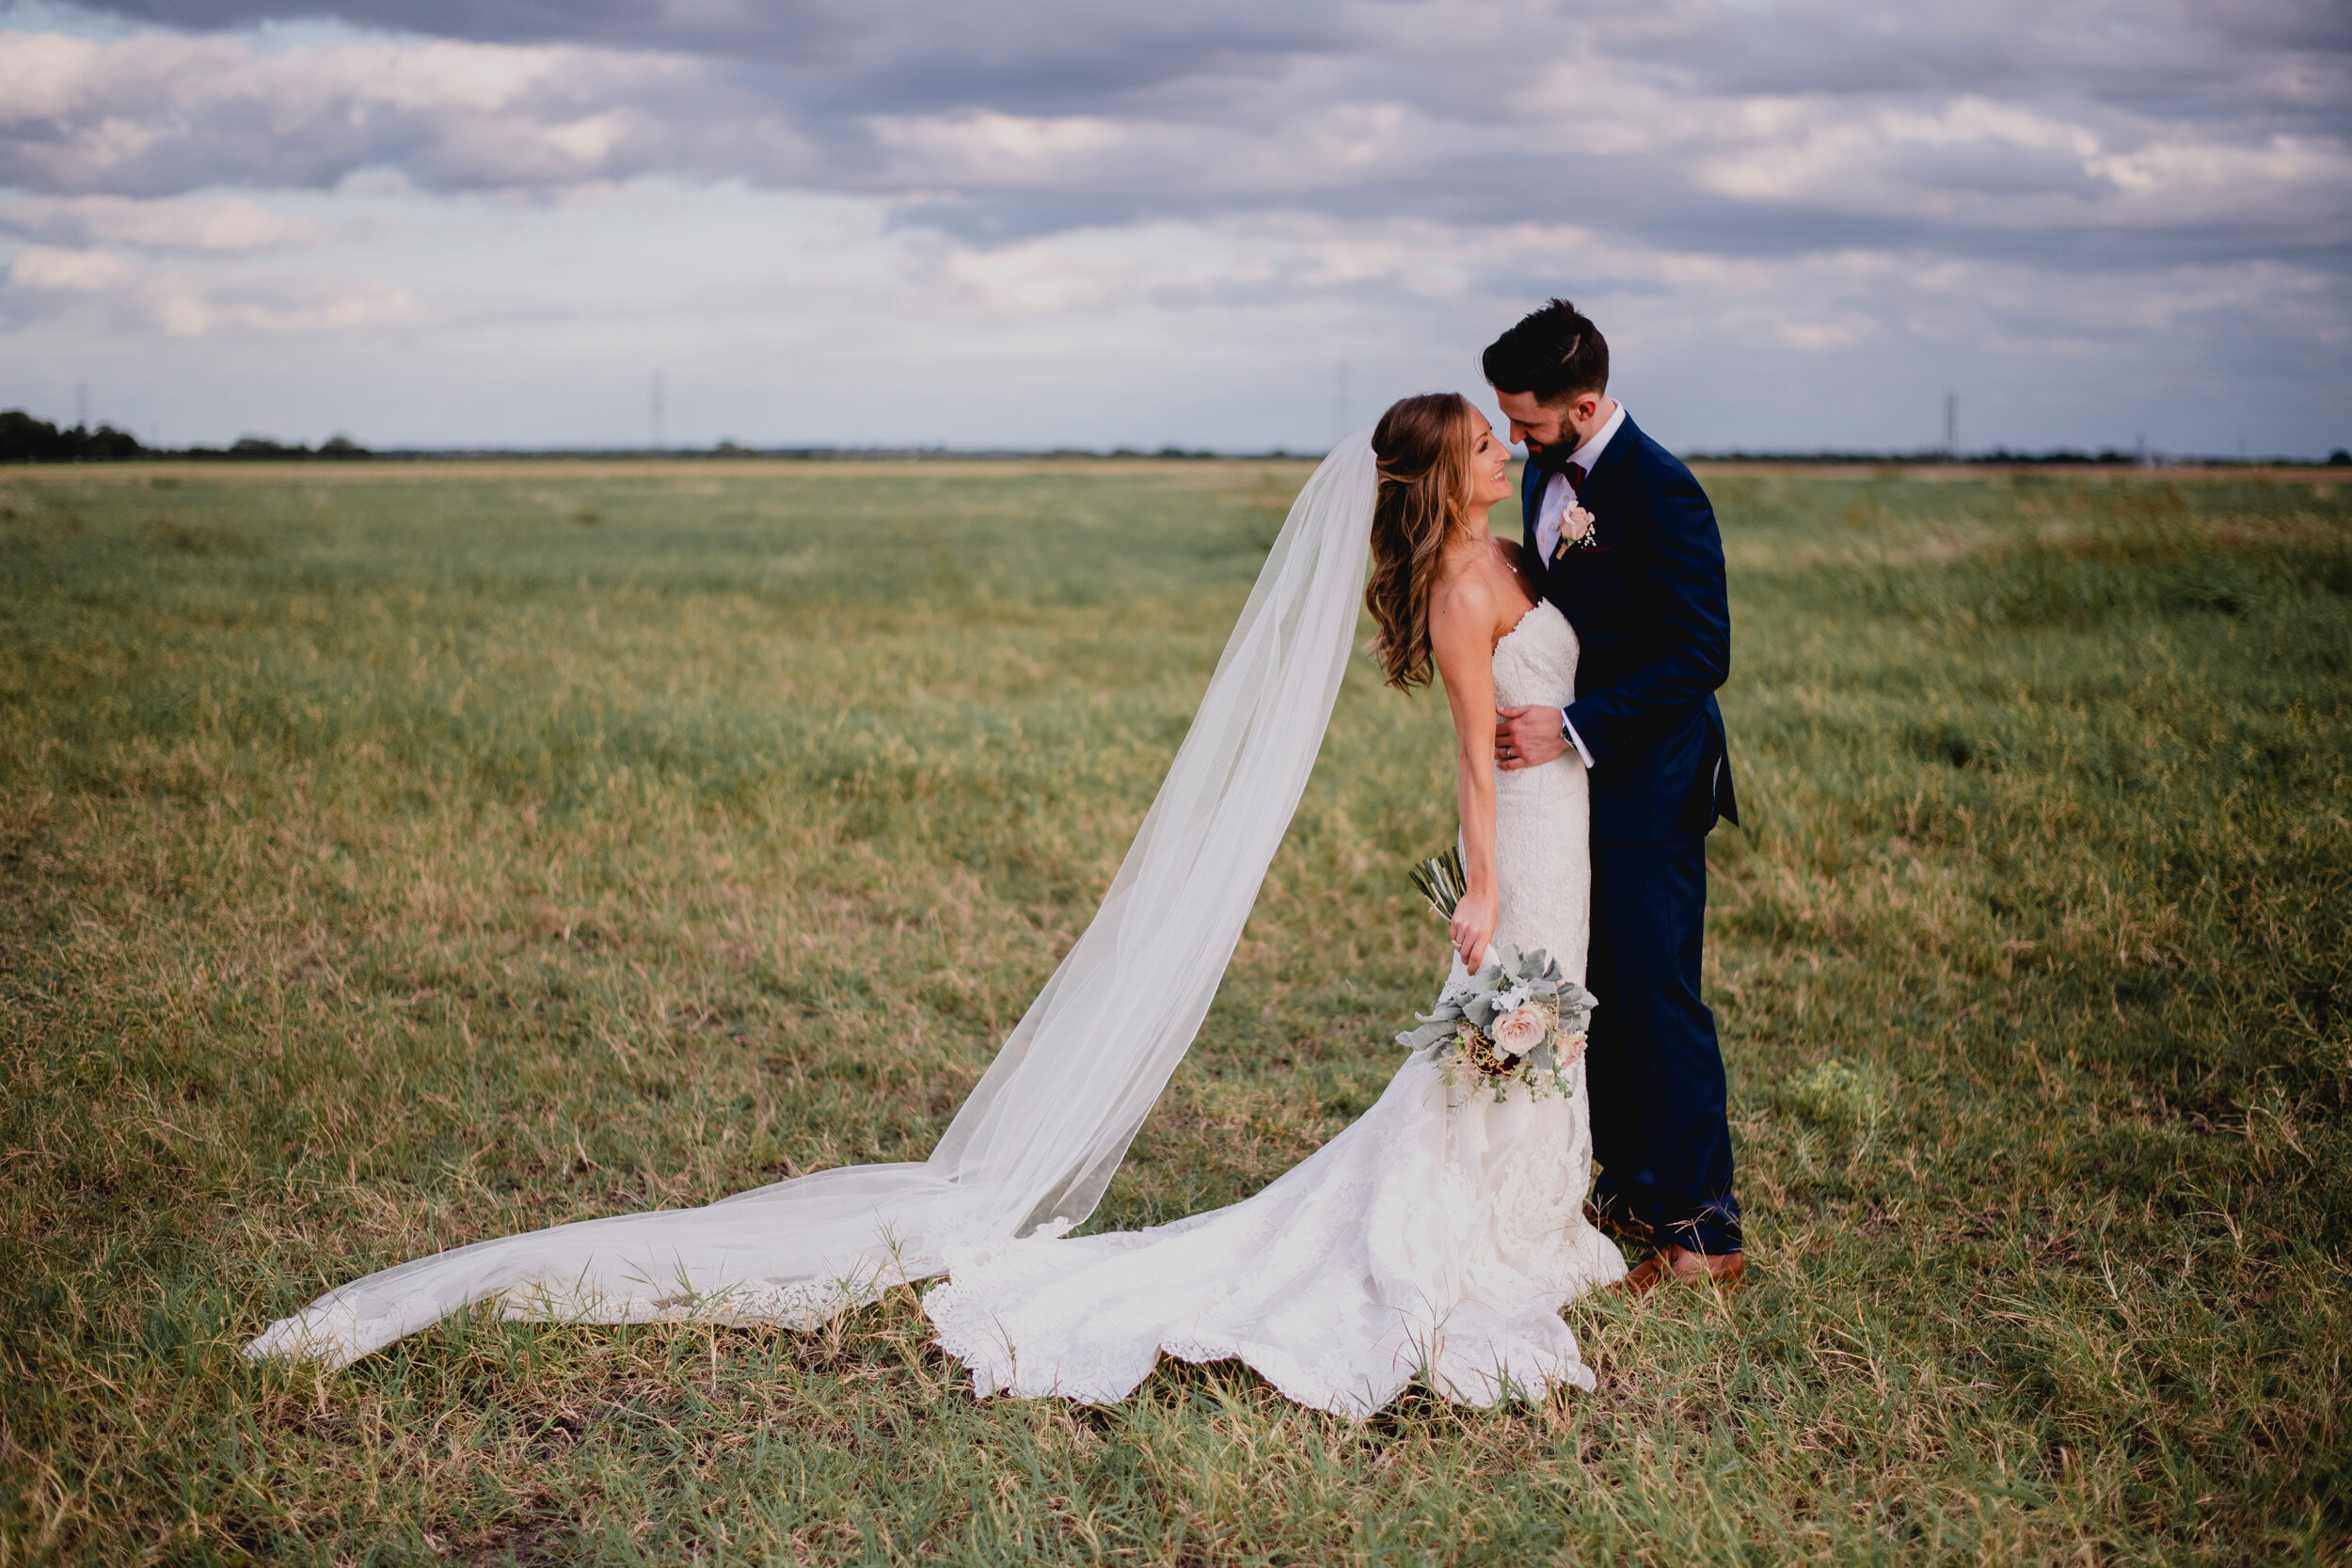 Austin and destination wedding Photographer the Allen Farmhaus EffJay Photography021.jpg